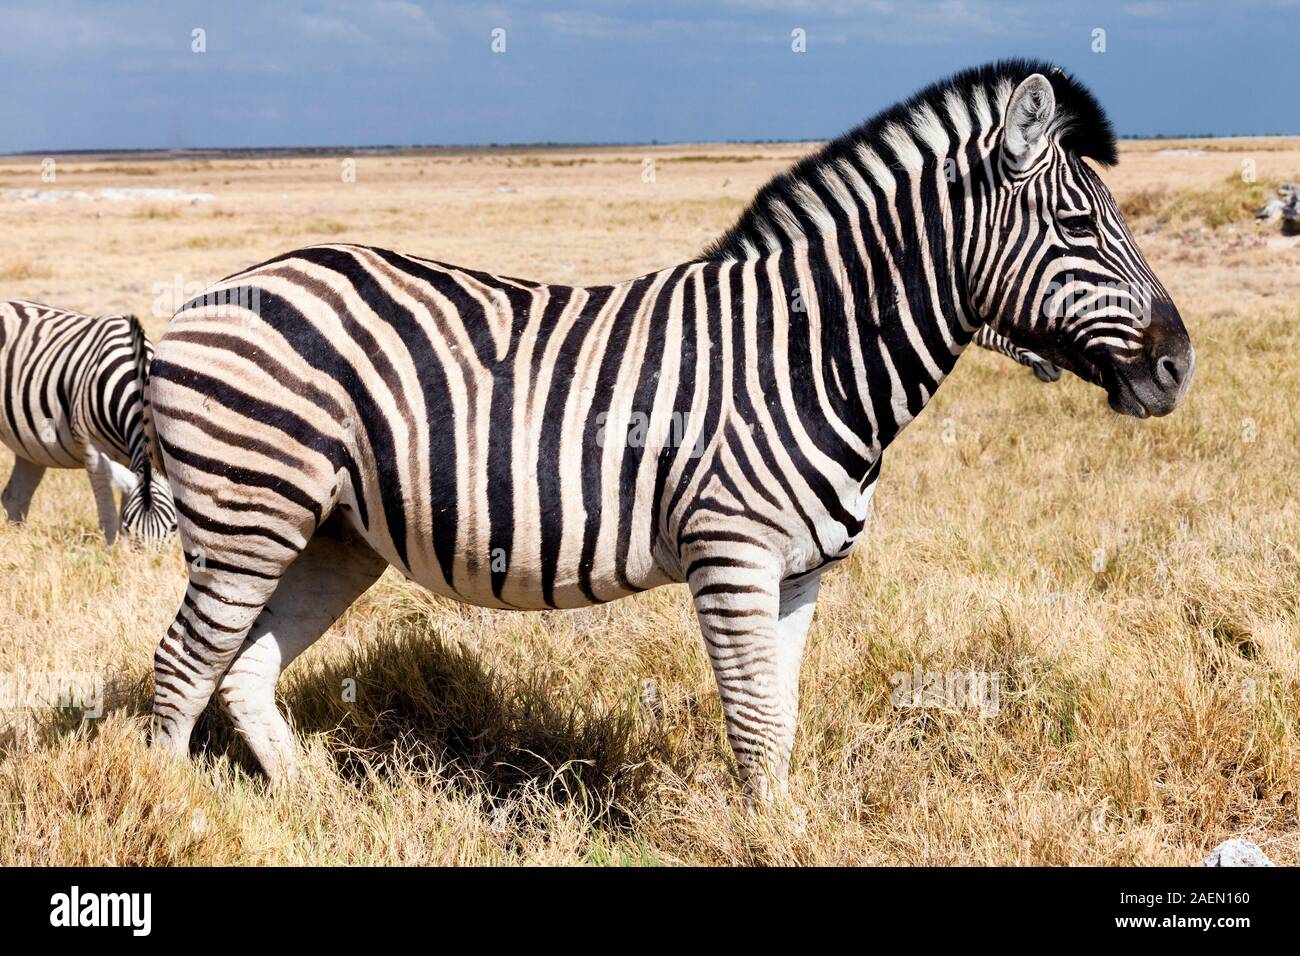 Zebra face and body, striped pattern, salt pan, Etosha National Park, Namibia, Southern Africa, Africa Stock Photo